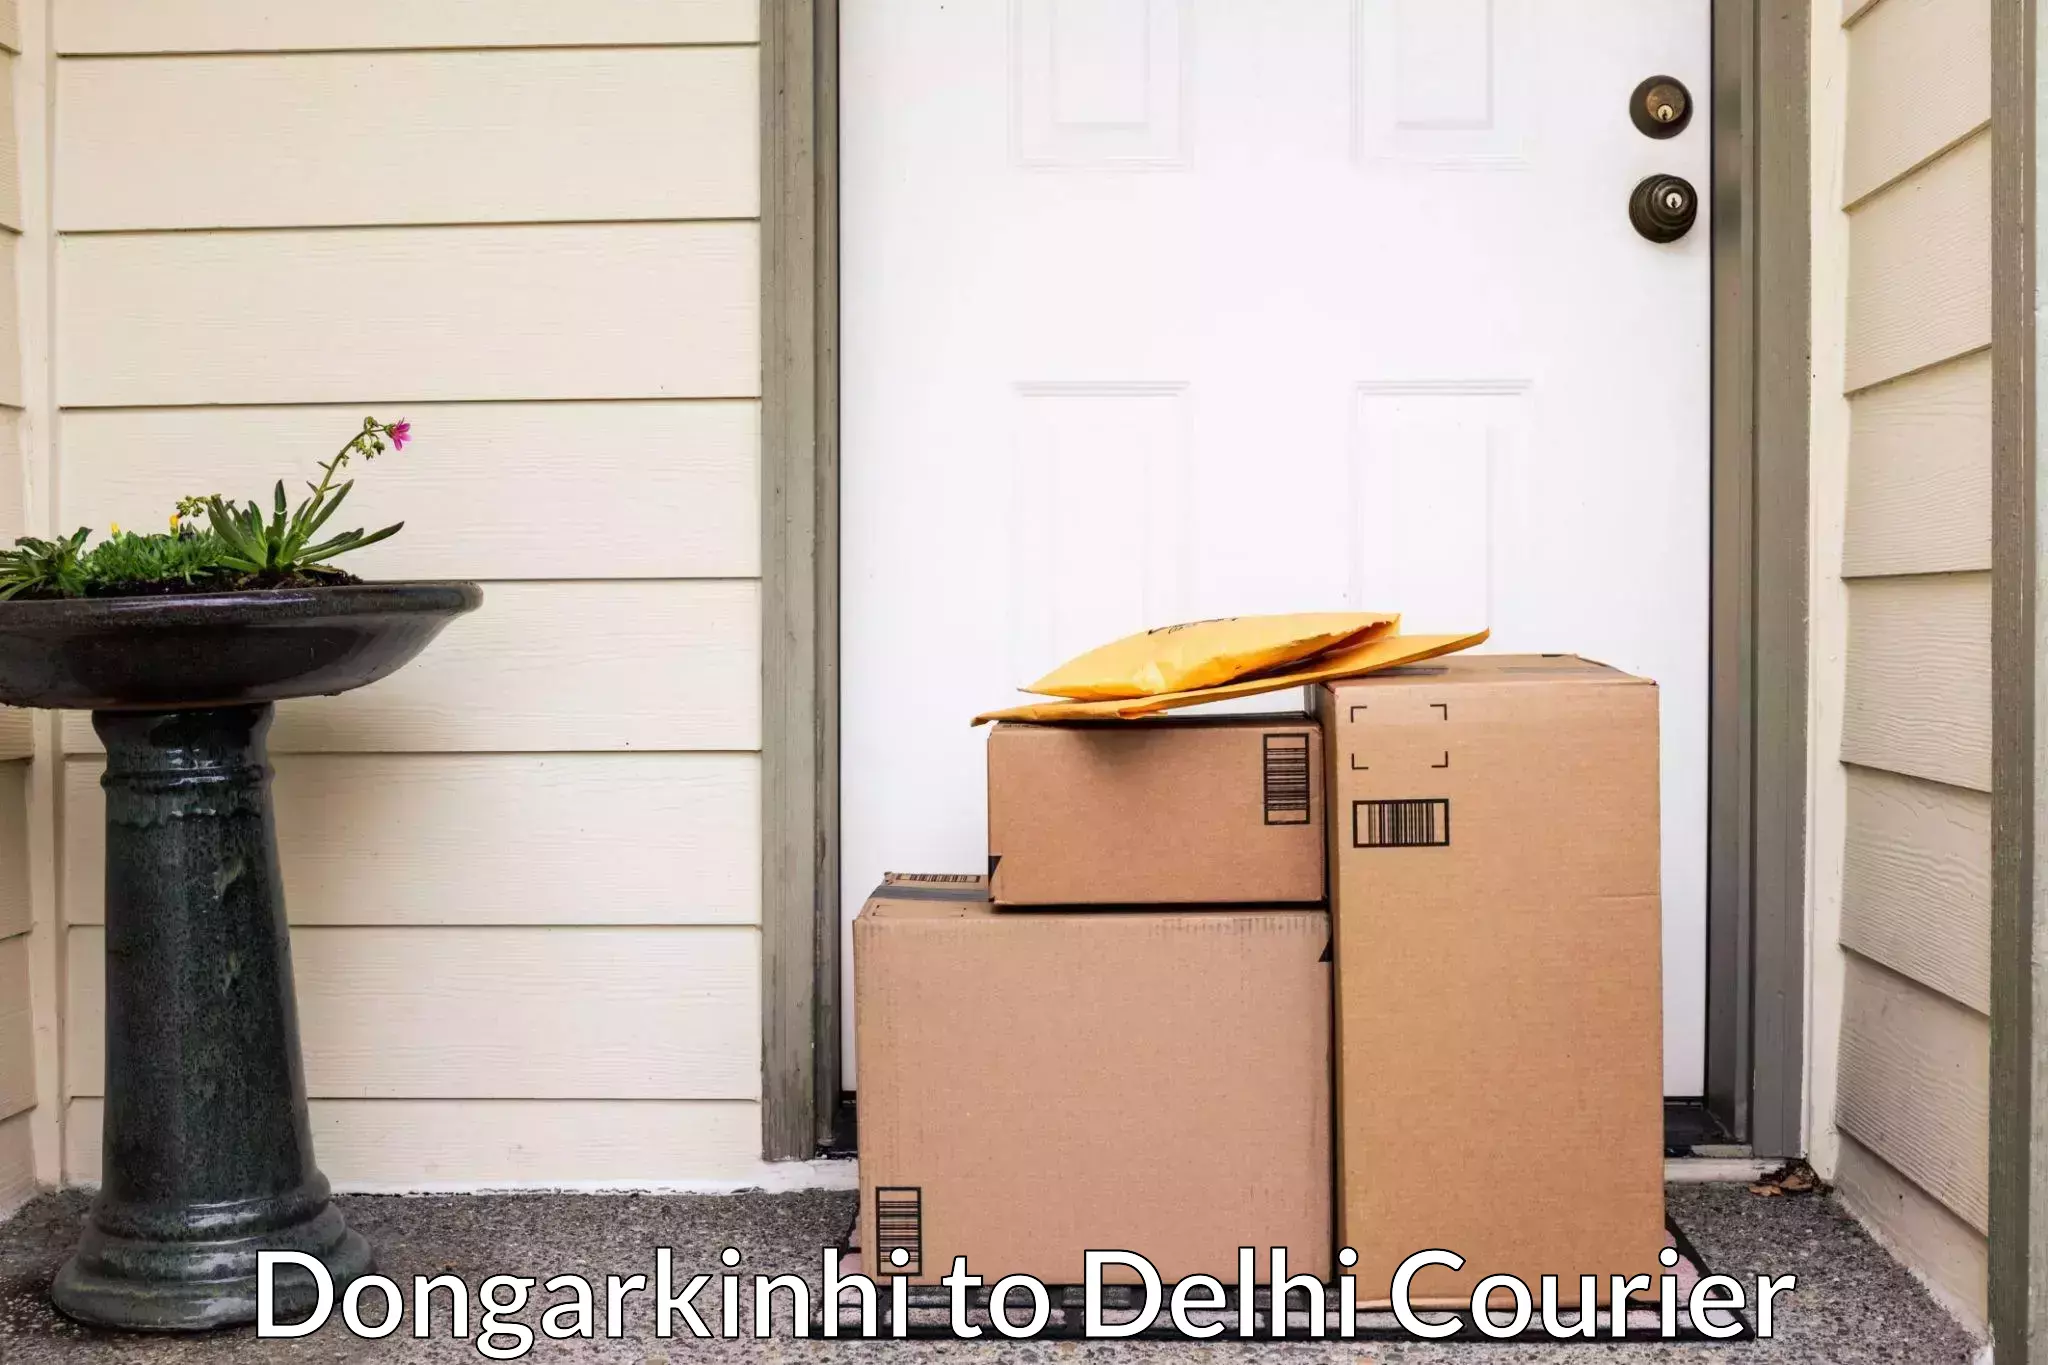 Professional moving company Dongarkinhi to Ramesh Nagar